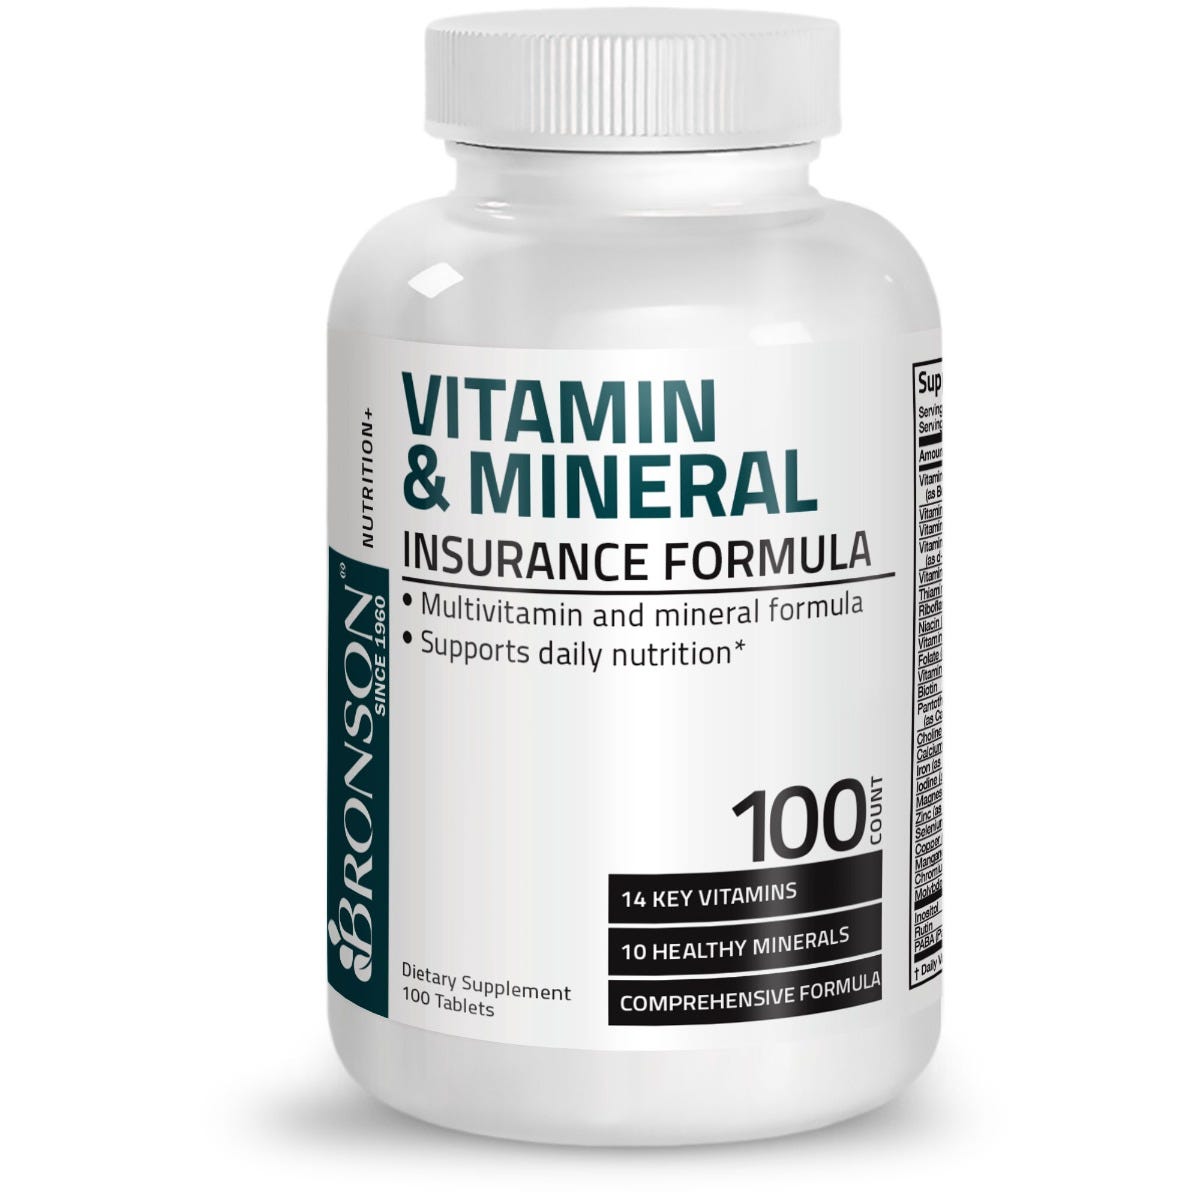 Vitamin & Mineral Insurance Formula - 100 Tablets view 2 of 5